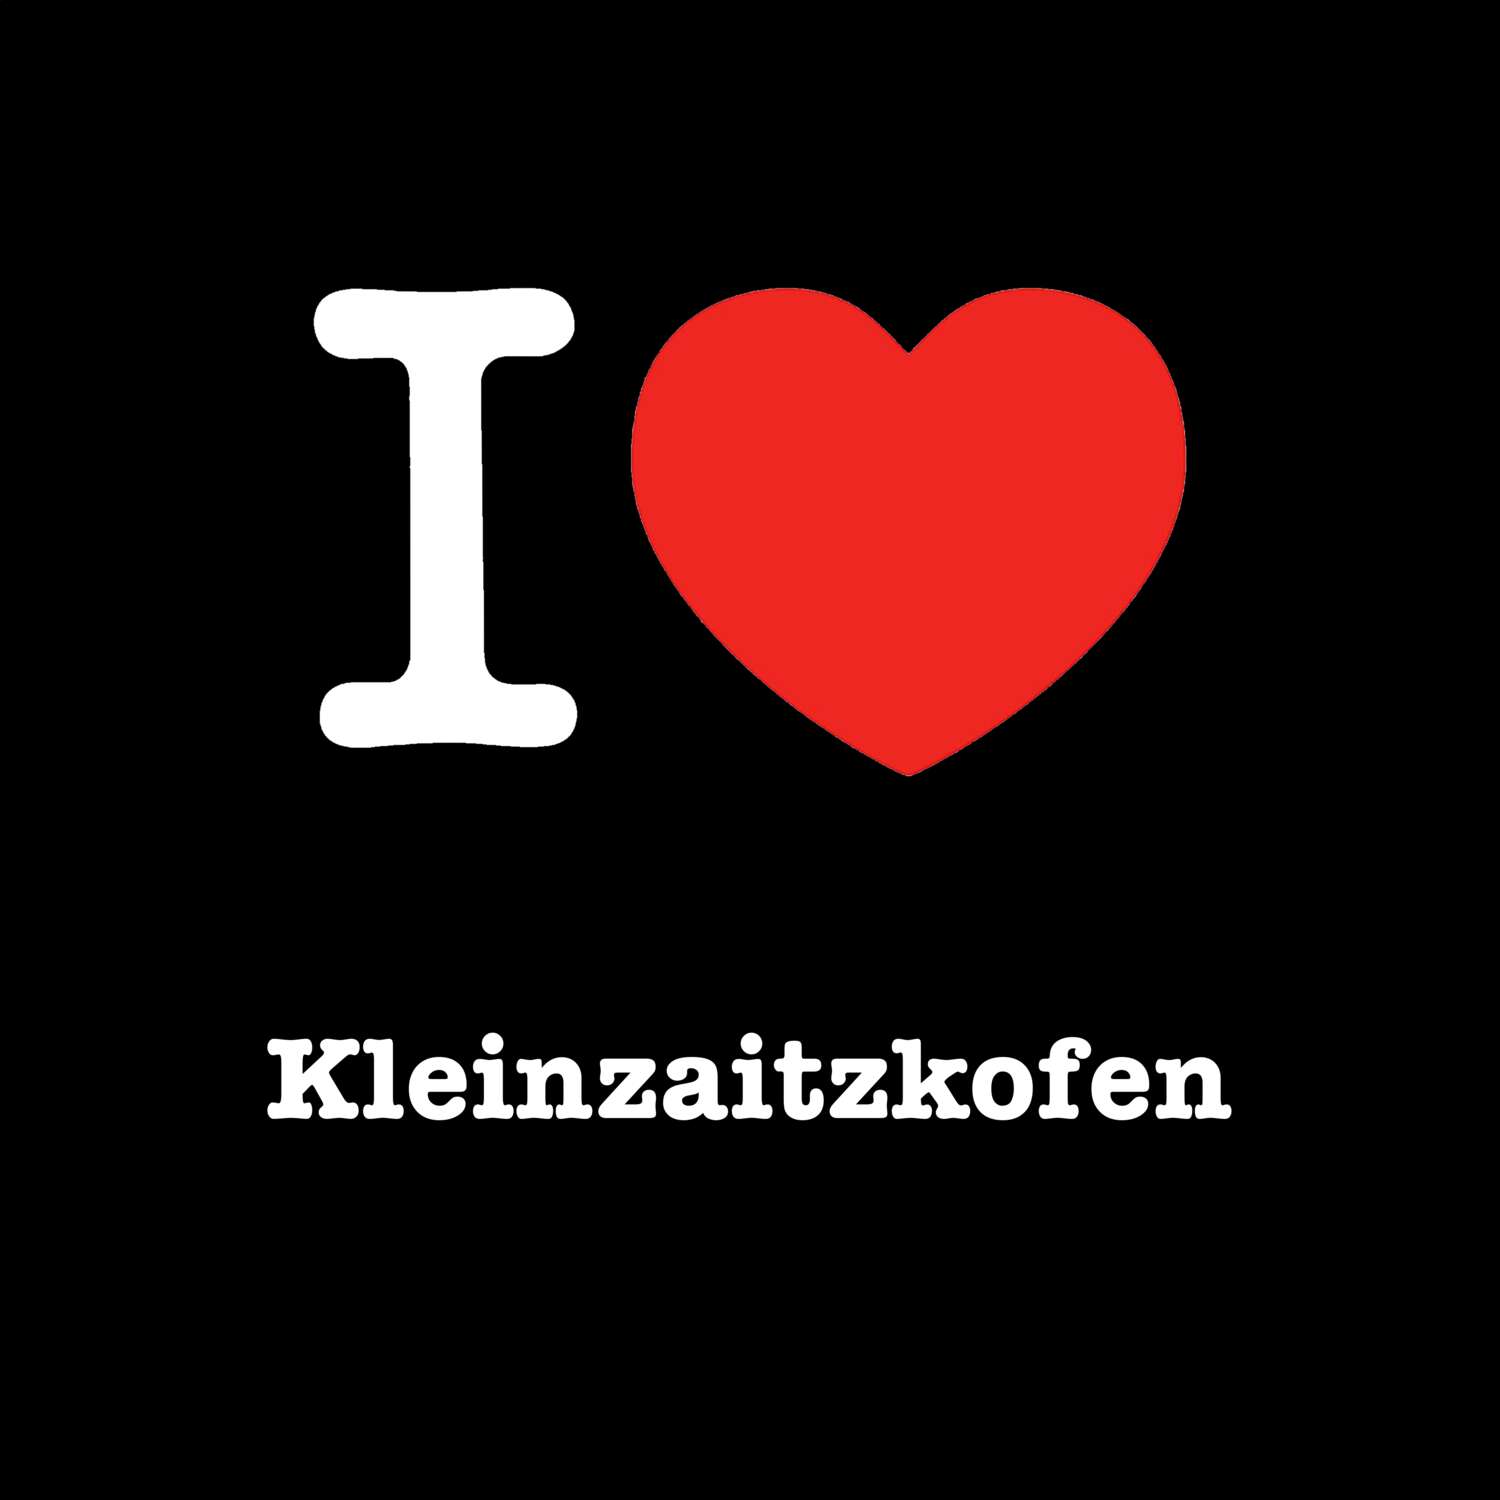 Kleinzaitzkofen T-Shirt »I love«